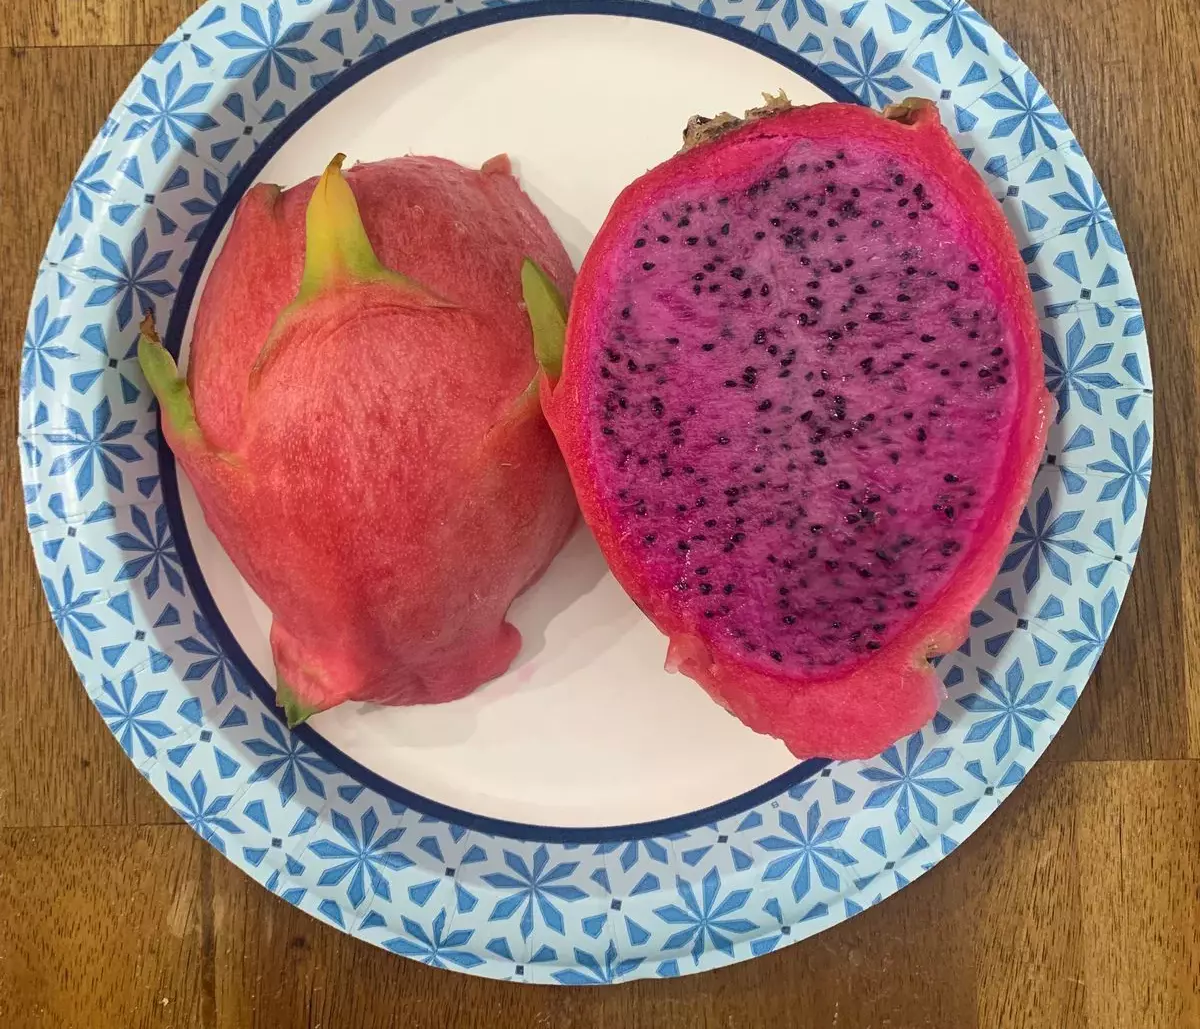 Purple Haze 5-S Dragon Fruit: A Grapegasmic Adventure in the World of Exotic Fruit